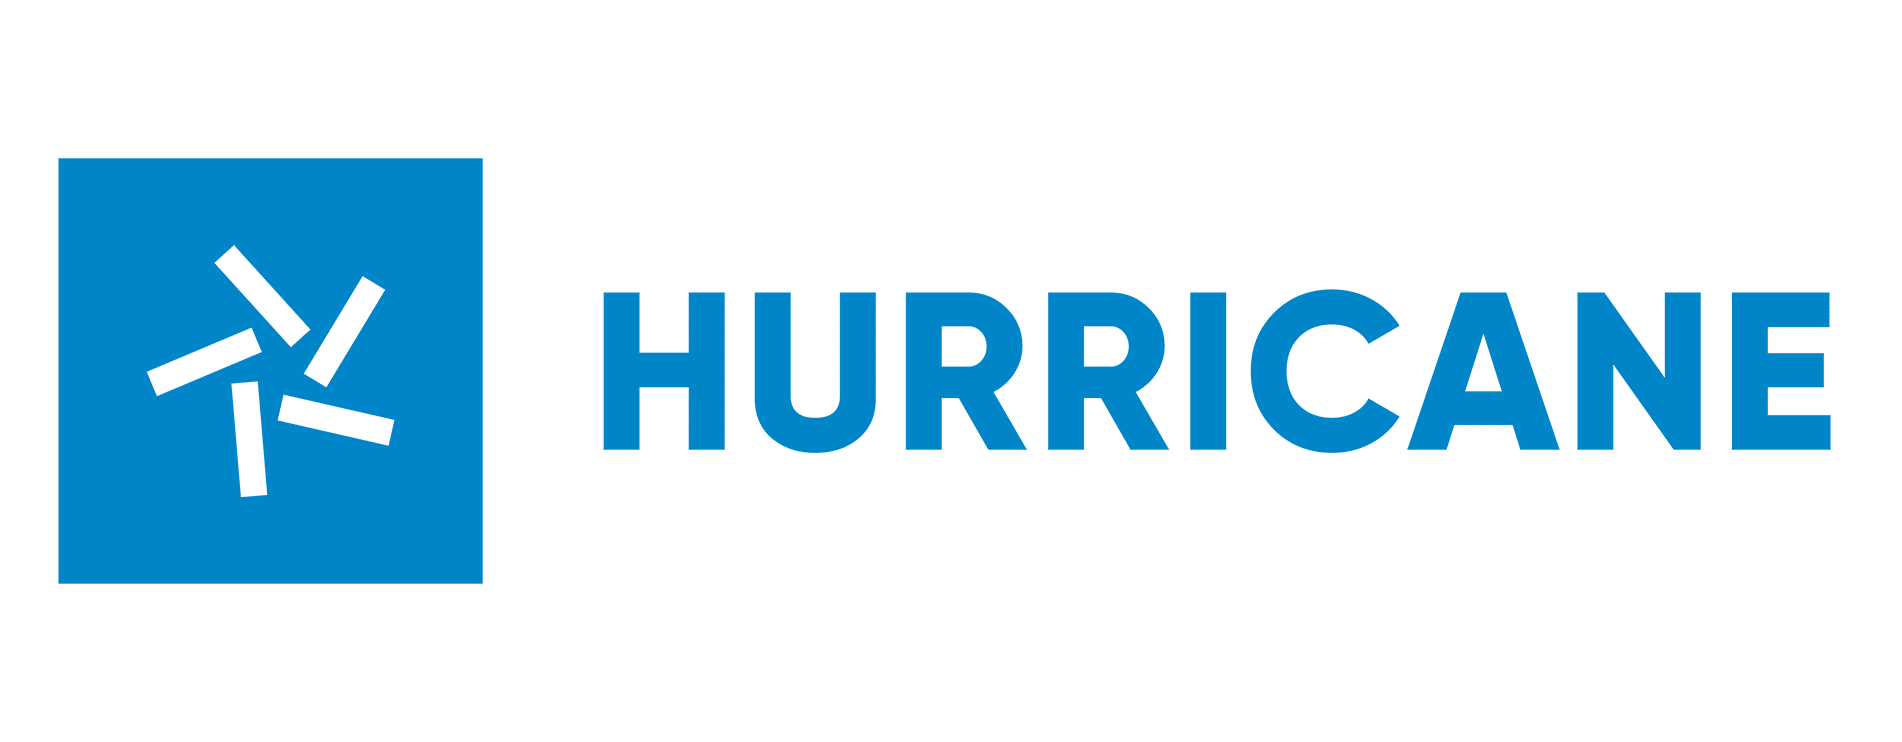 Hurricane-group-logo-horizontal (2)